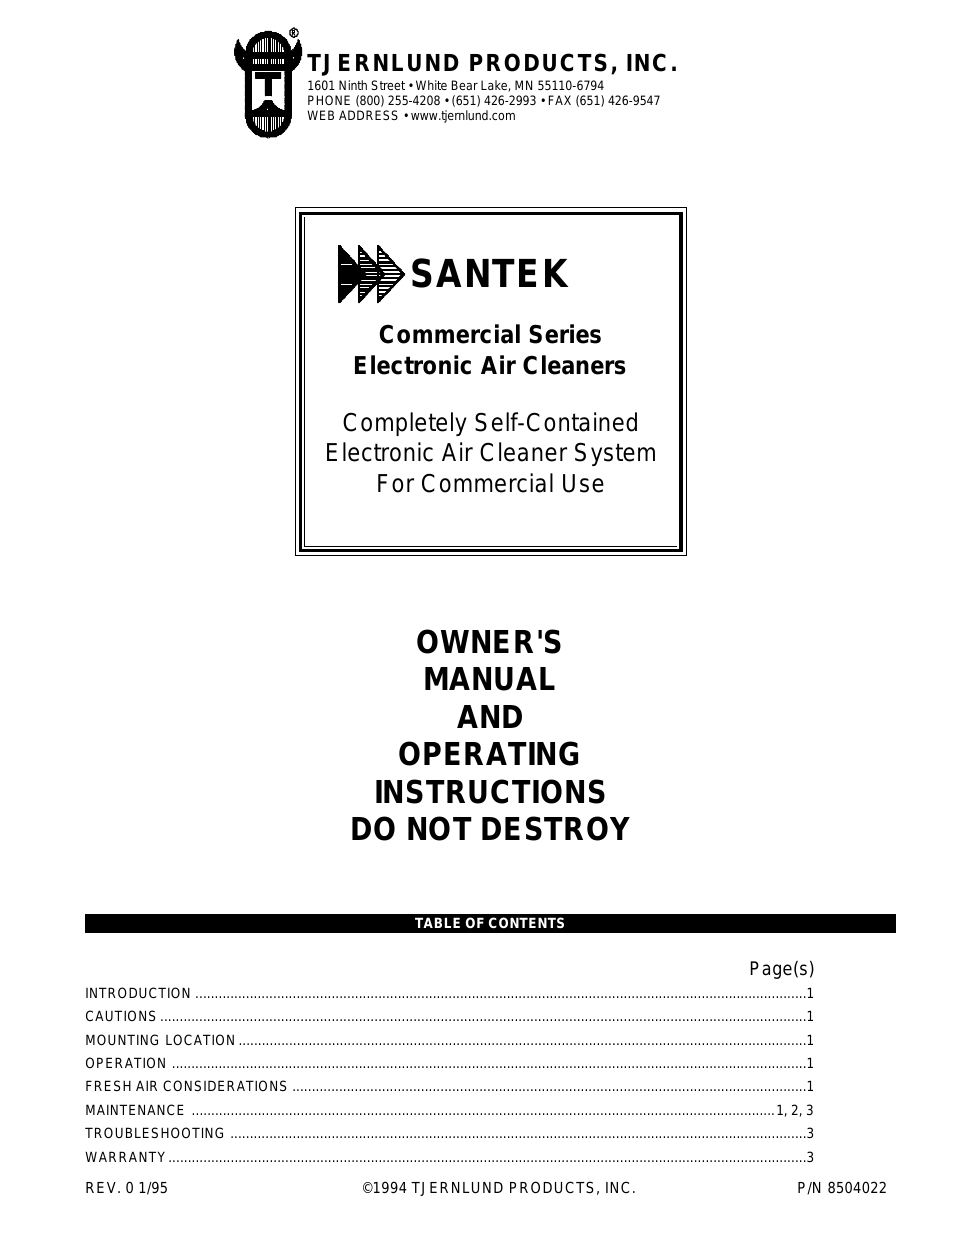 Santek Air Cleaners (Discontinued) 8504022 Rev 1 01/95